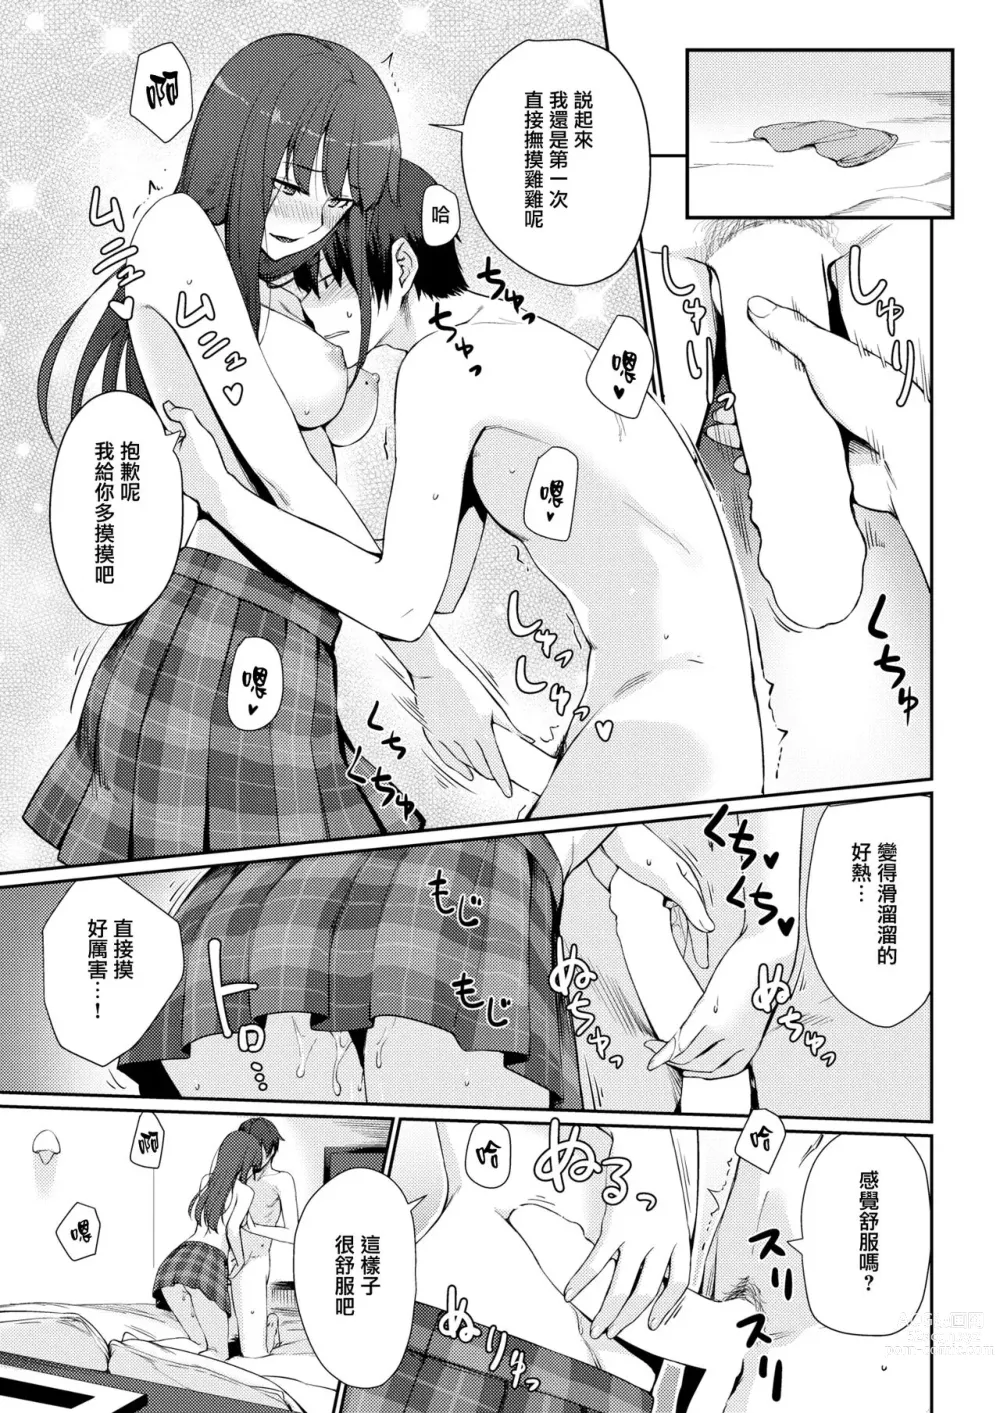 Page 7 of manga Hana no Iwato